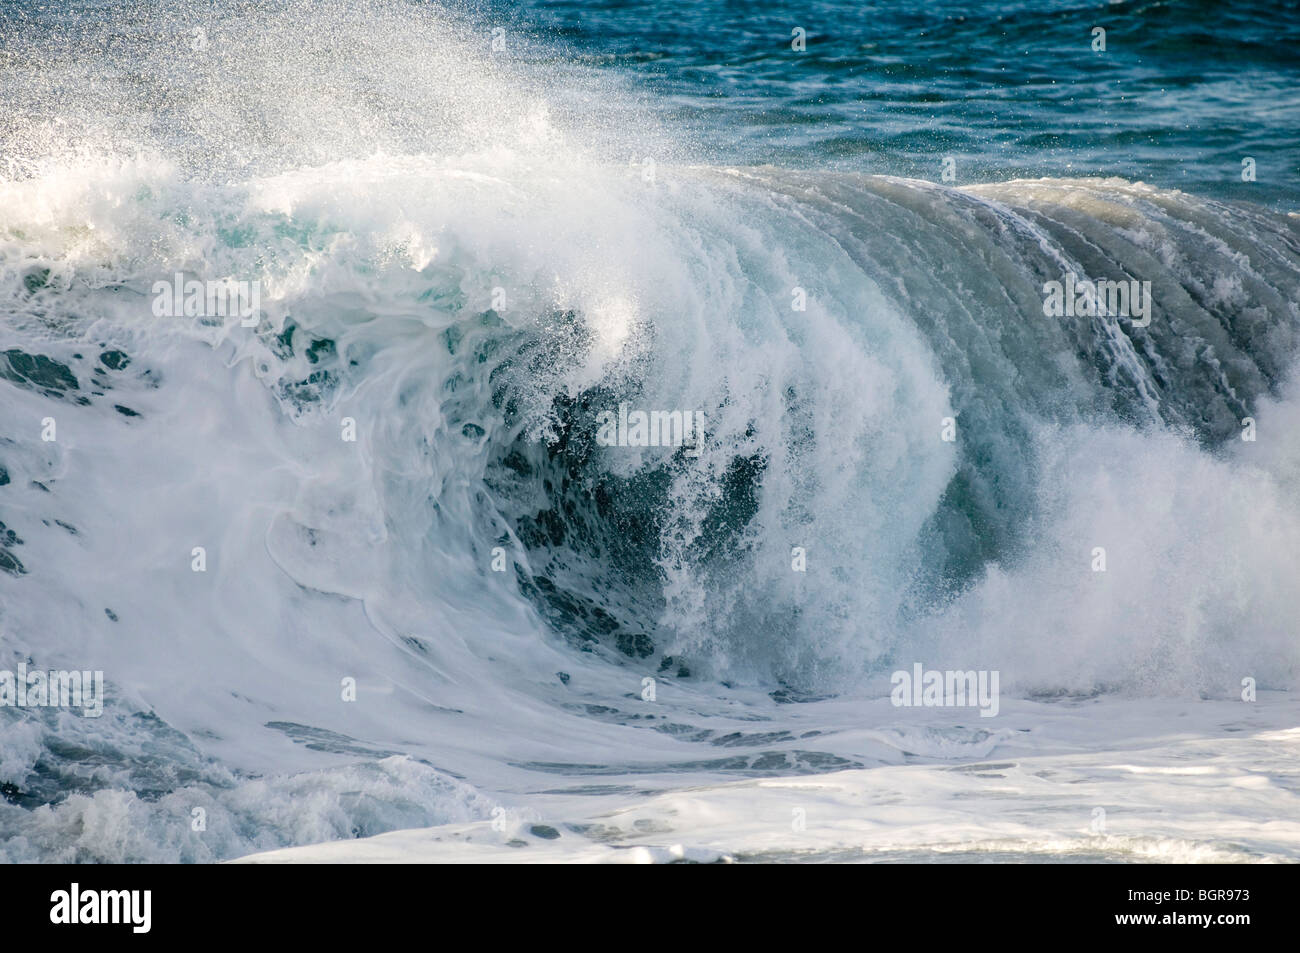 wave waves rough sea white horses surf surfing atlantic rollers crash crashing water sea seas spray blue surfing fuerteventura c Stock Photo